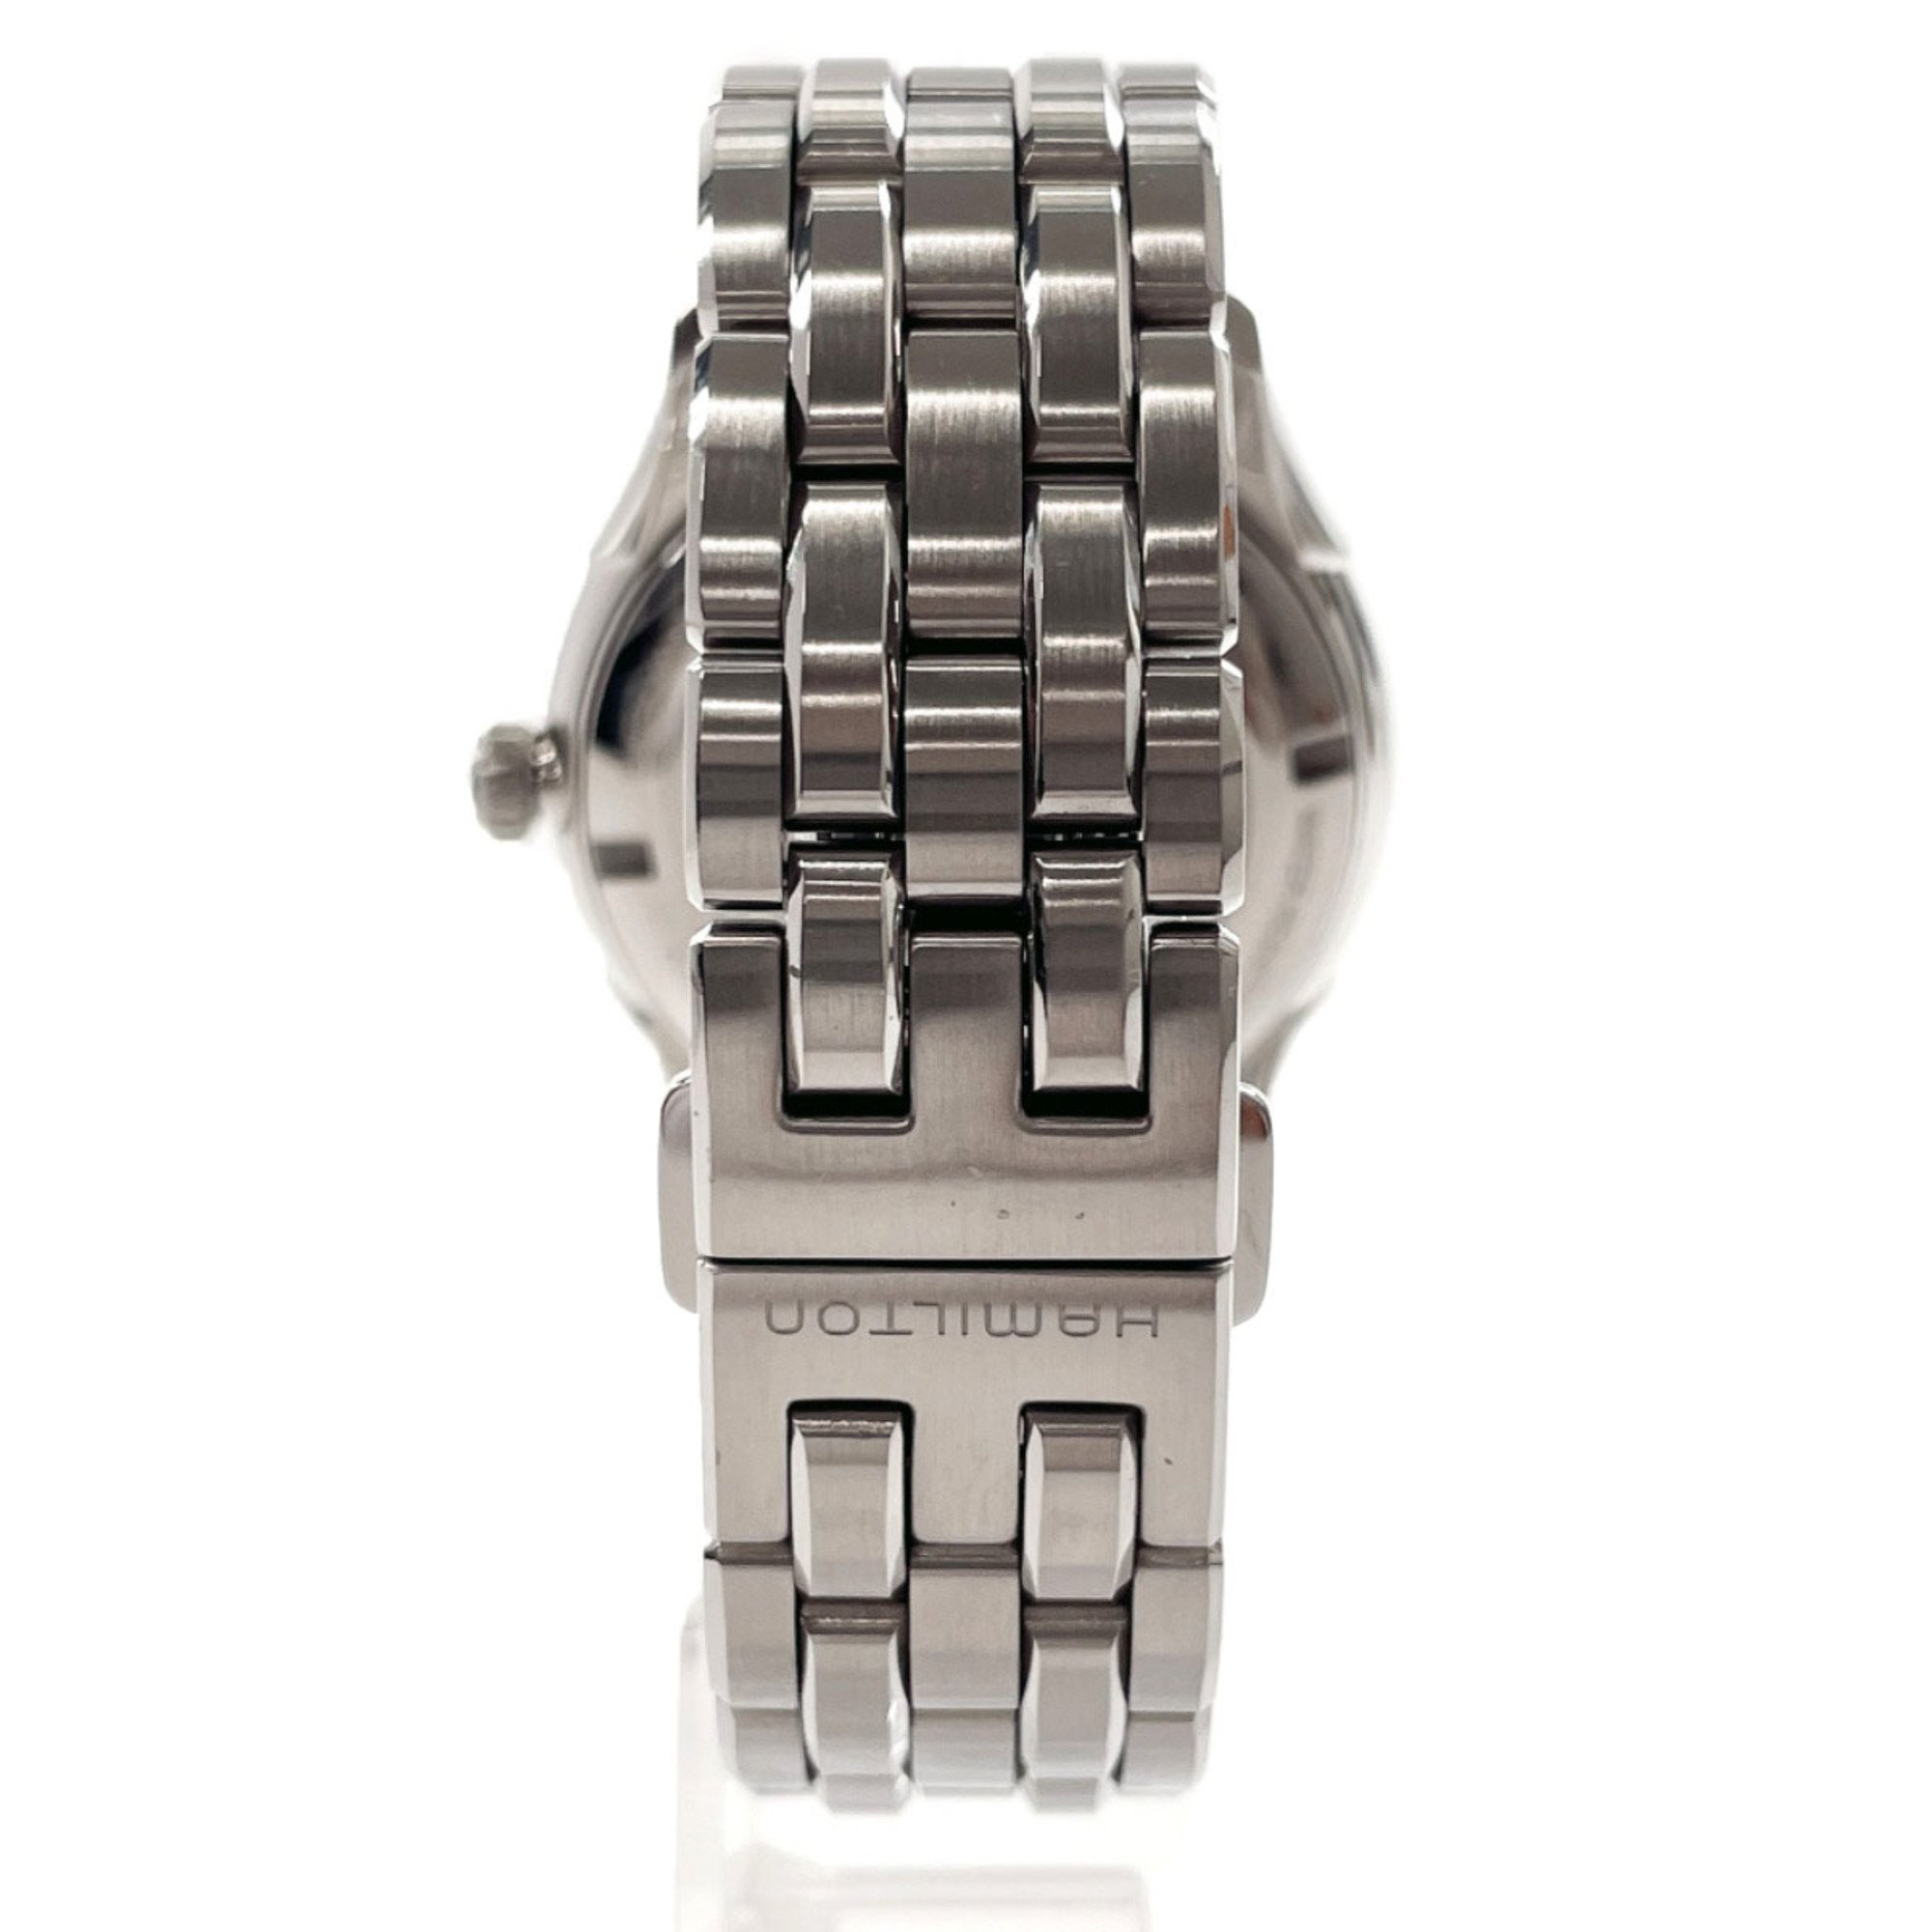 HAMILTON Hamilton Jazzmaster H324510 Watch Stainless Steel Silver Quartz Dial Men's F3081840